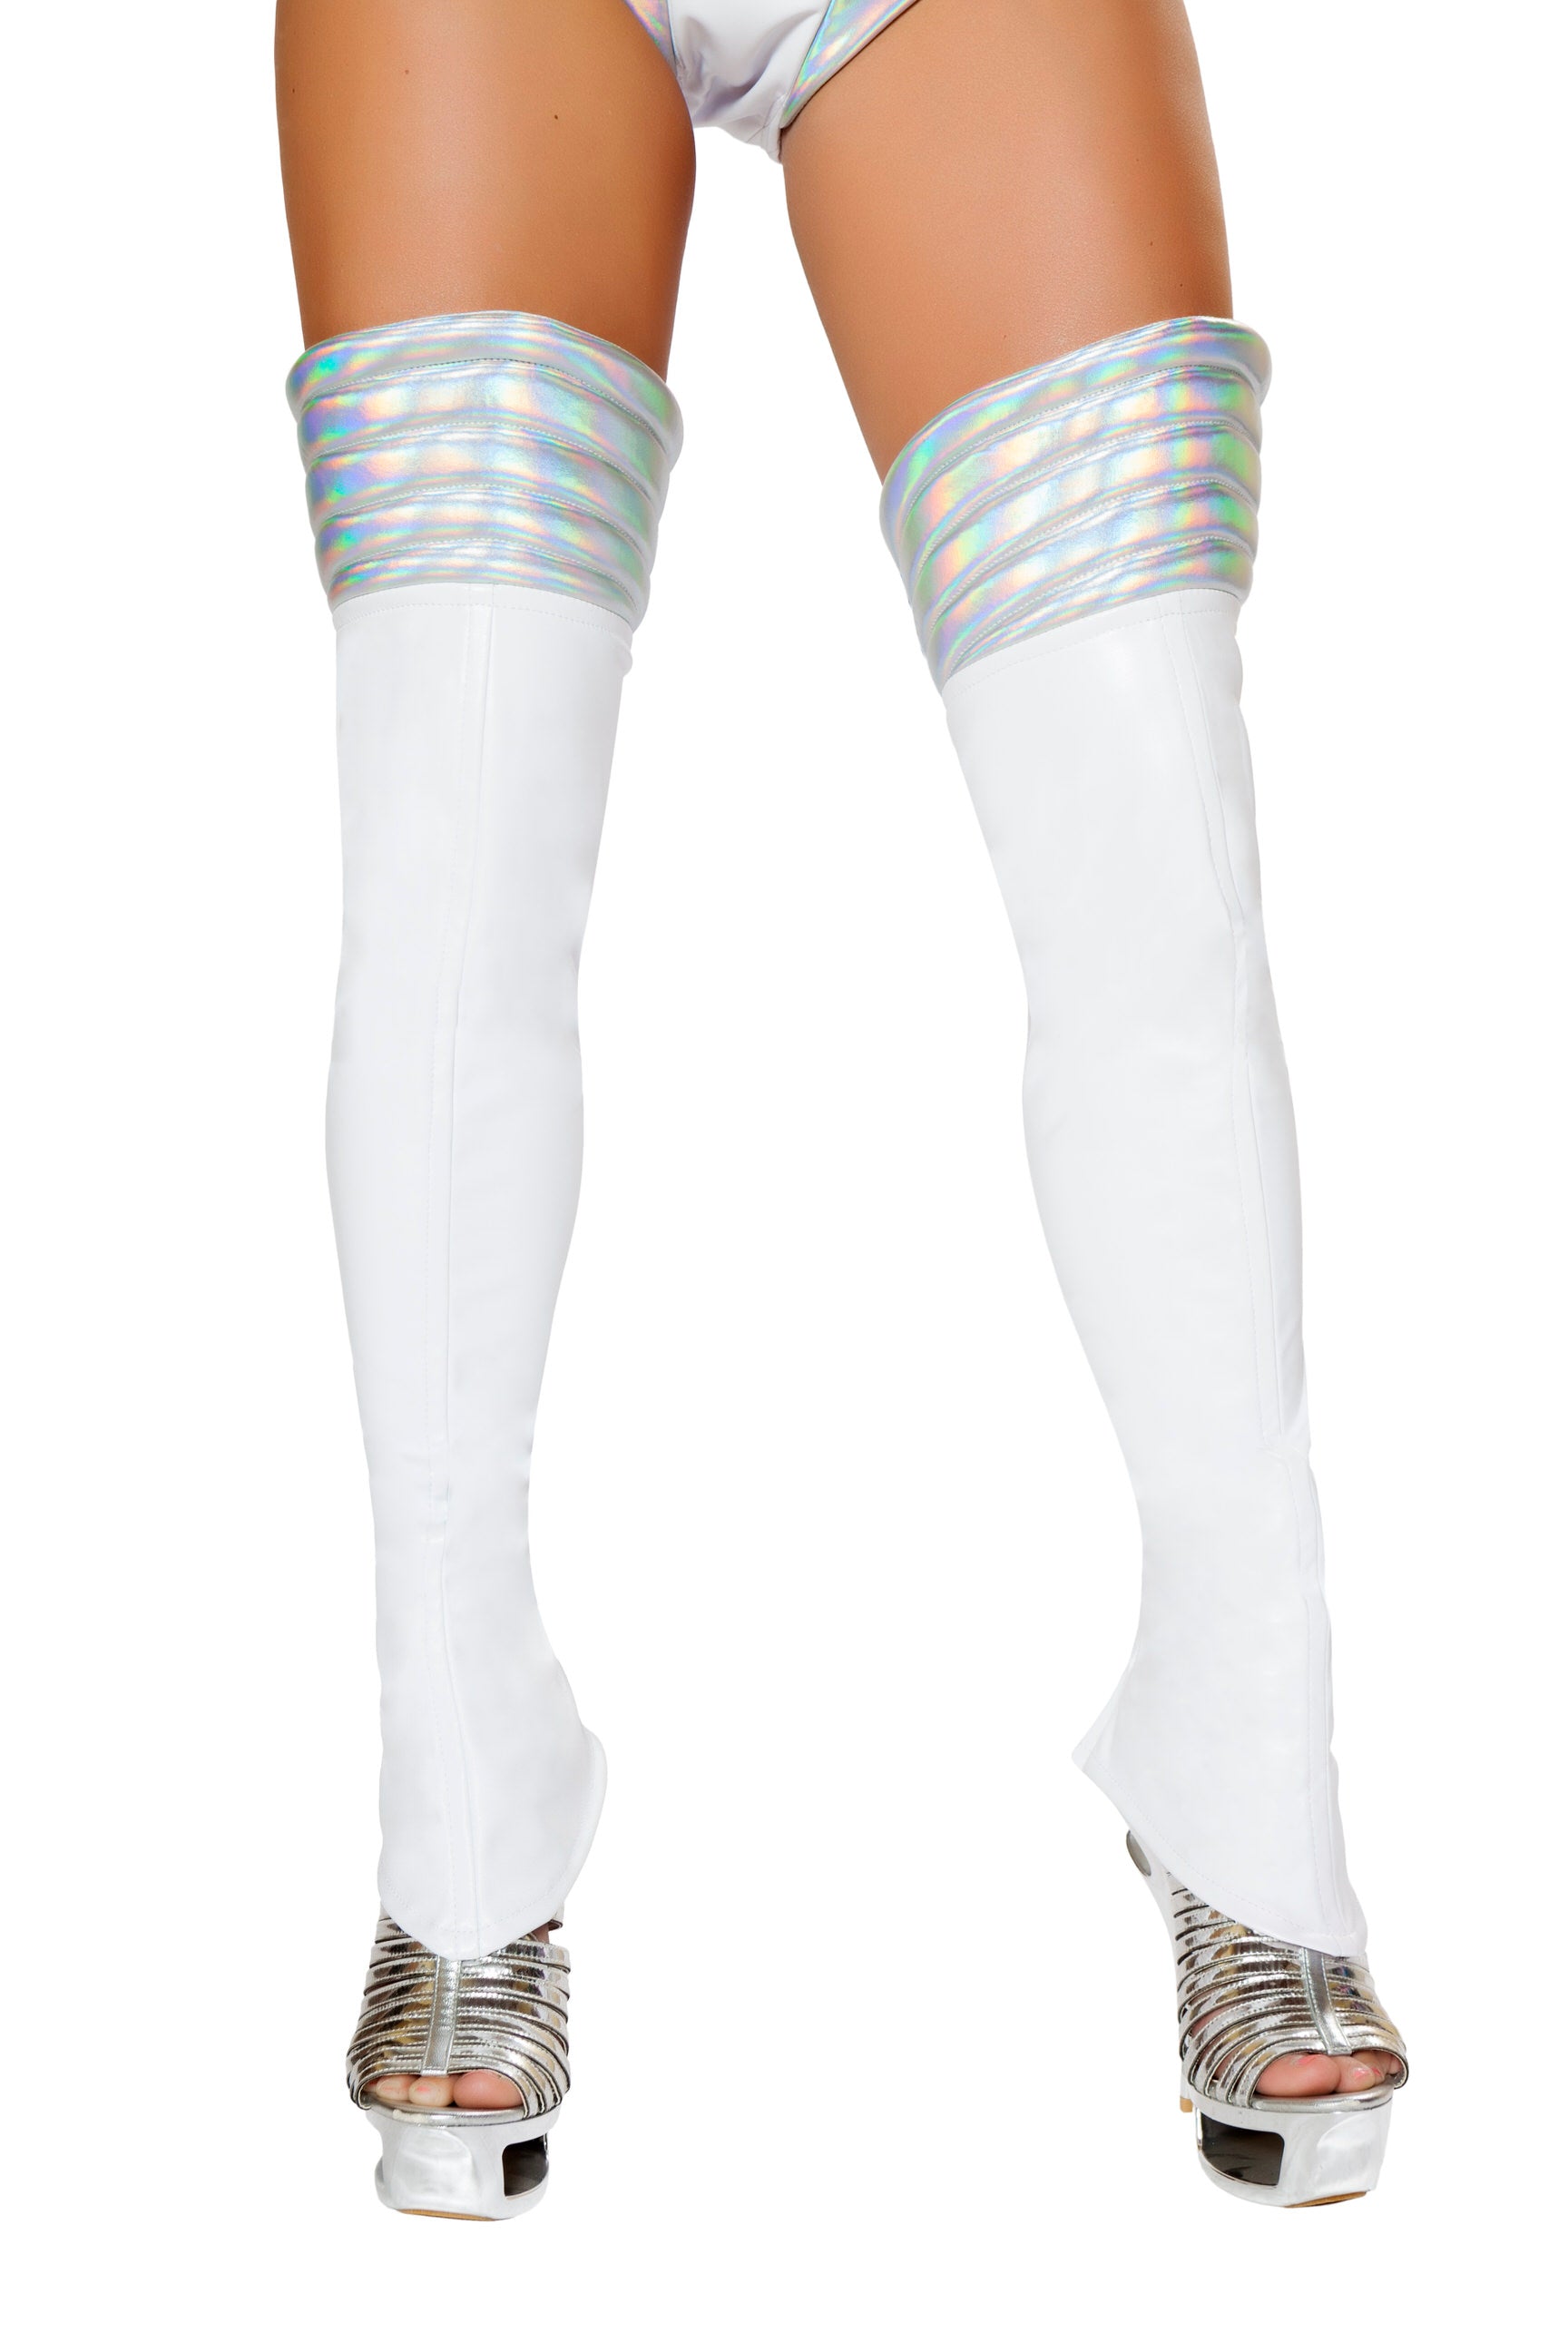 Roma Costume Space Girl Leggings Costume Accessory White/Silver One Size